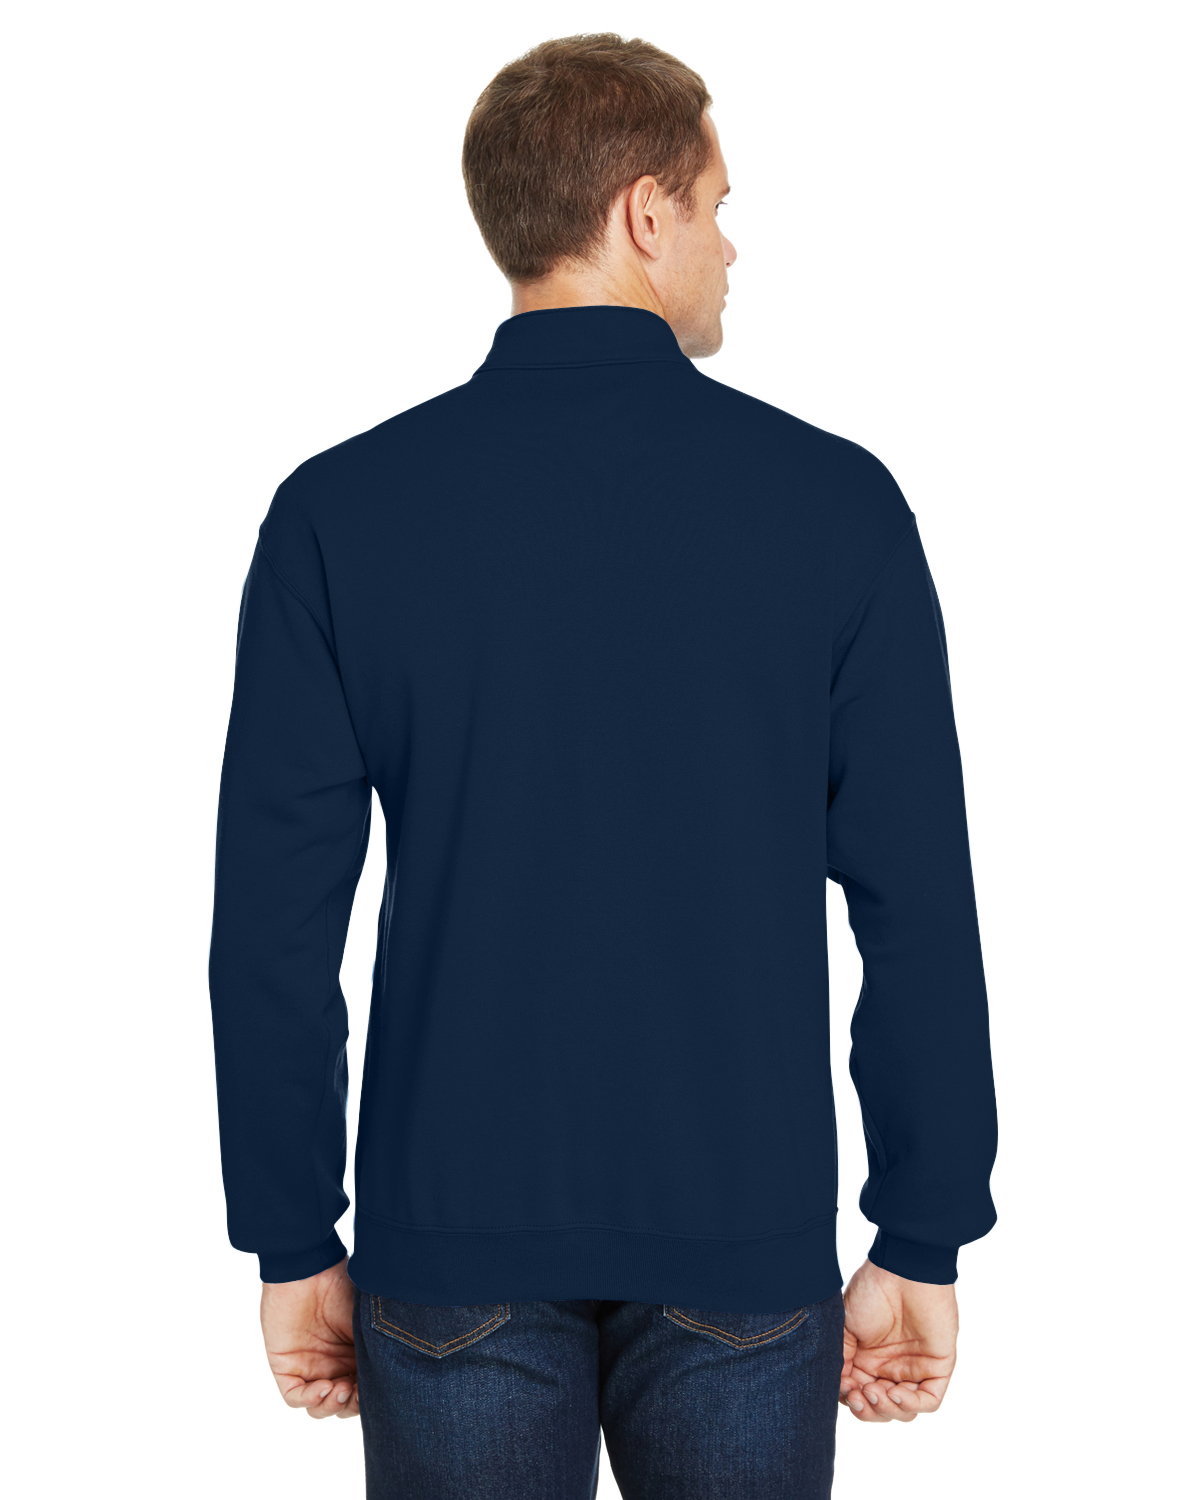 Mens 7.2 oz. Sofspun Quarter-Zip Sweatshirt (2 PACK) - image 3 of 3